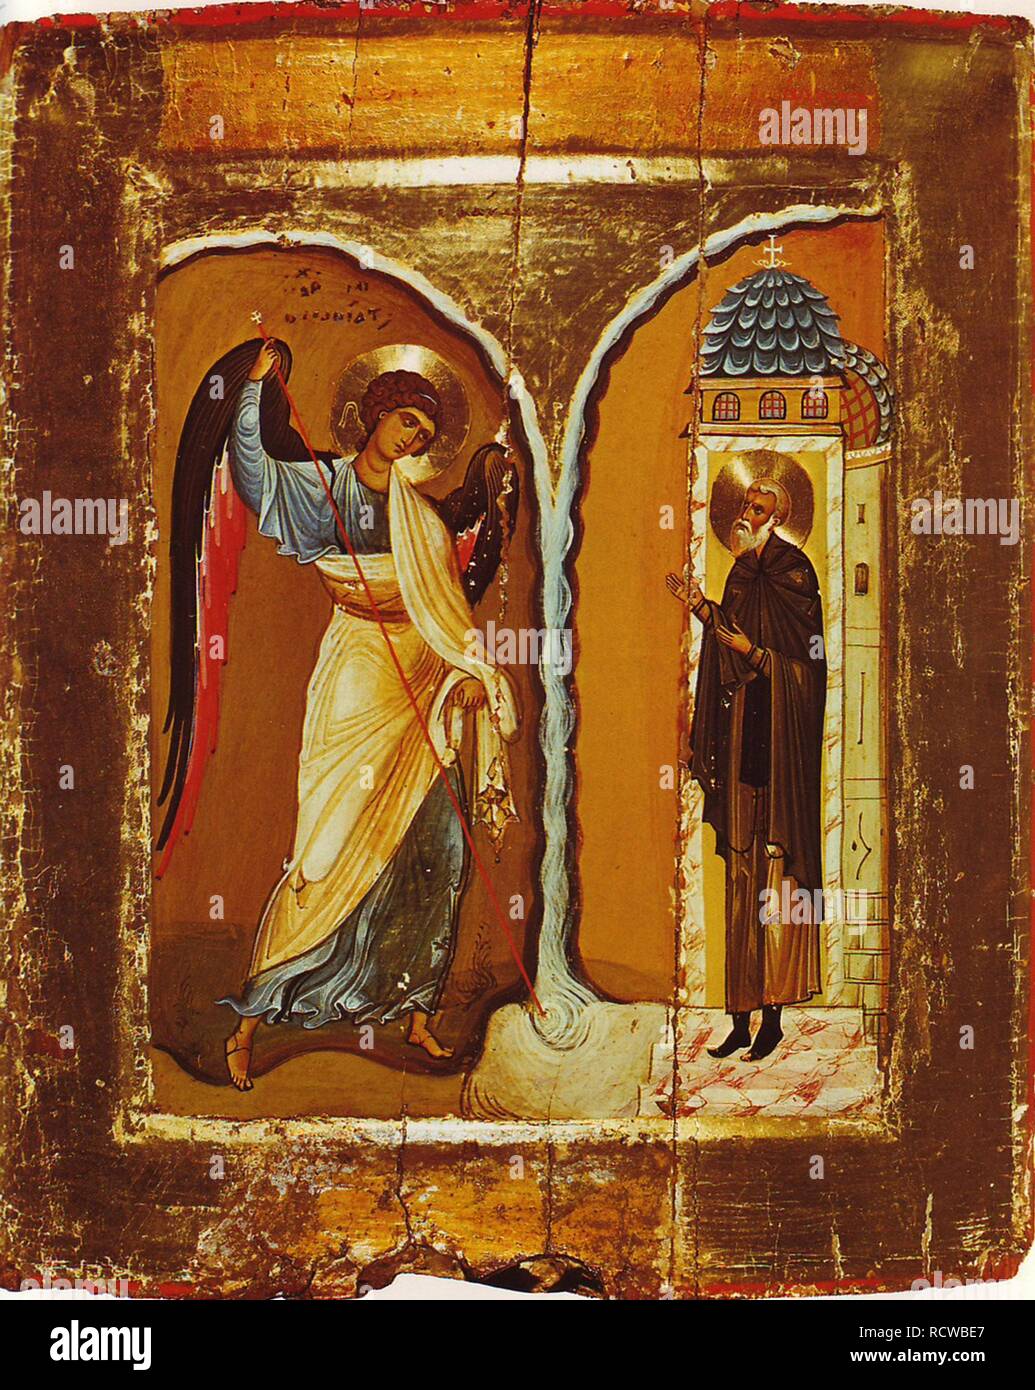 The Miracle of the Archangel Michael at Chonae. Museum: Saint Catherine's Monastery, Mount Sinai, Egypt. Author: Byzantine icon. Stock Photo